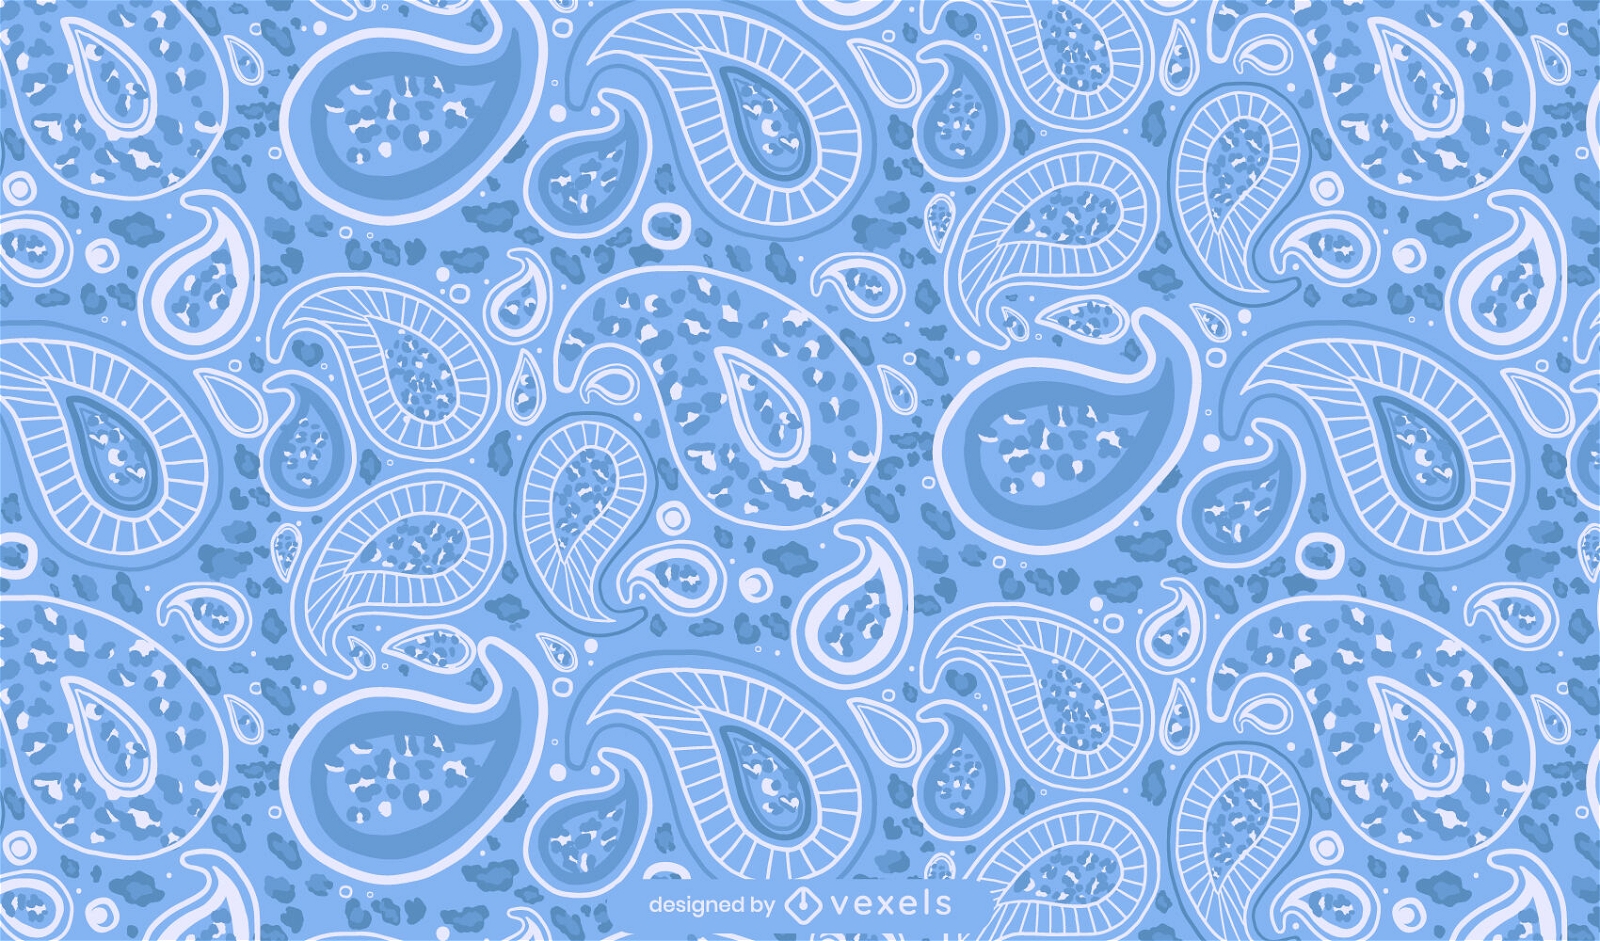 https://images.vexels.com/media/users/3/266732/raw/d7263d159f28cb41244201aee6d737c6-leopard-paisley-blue-seamless-pattern.jpg